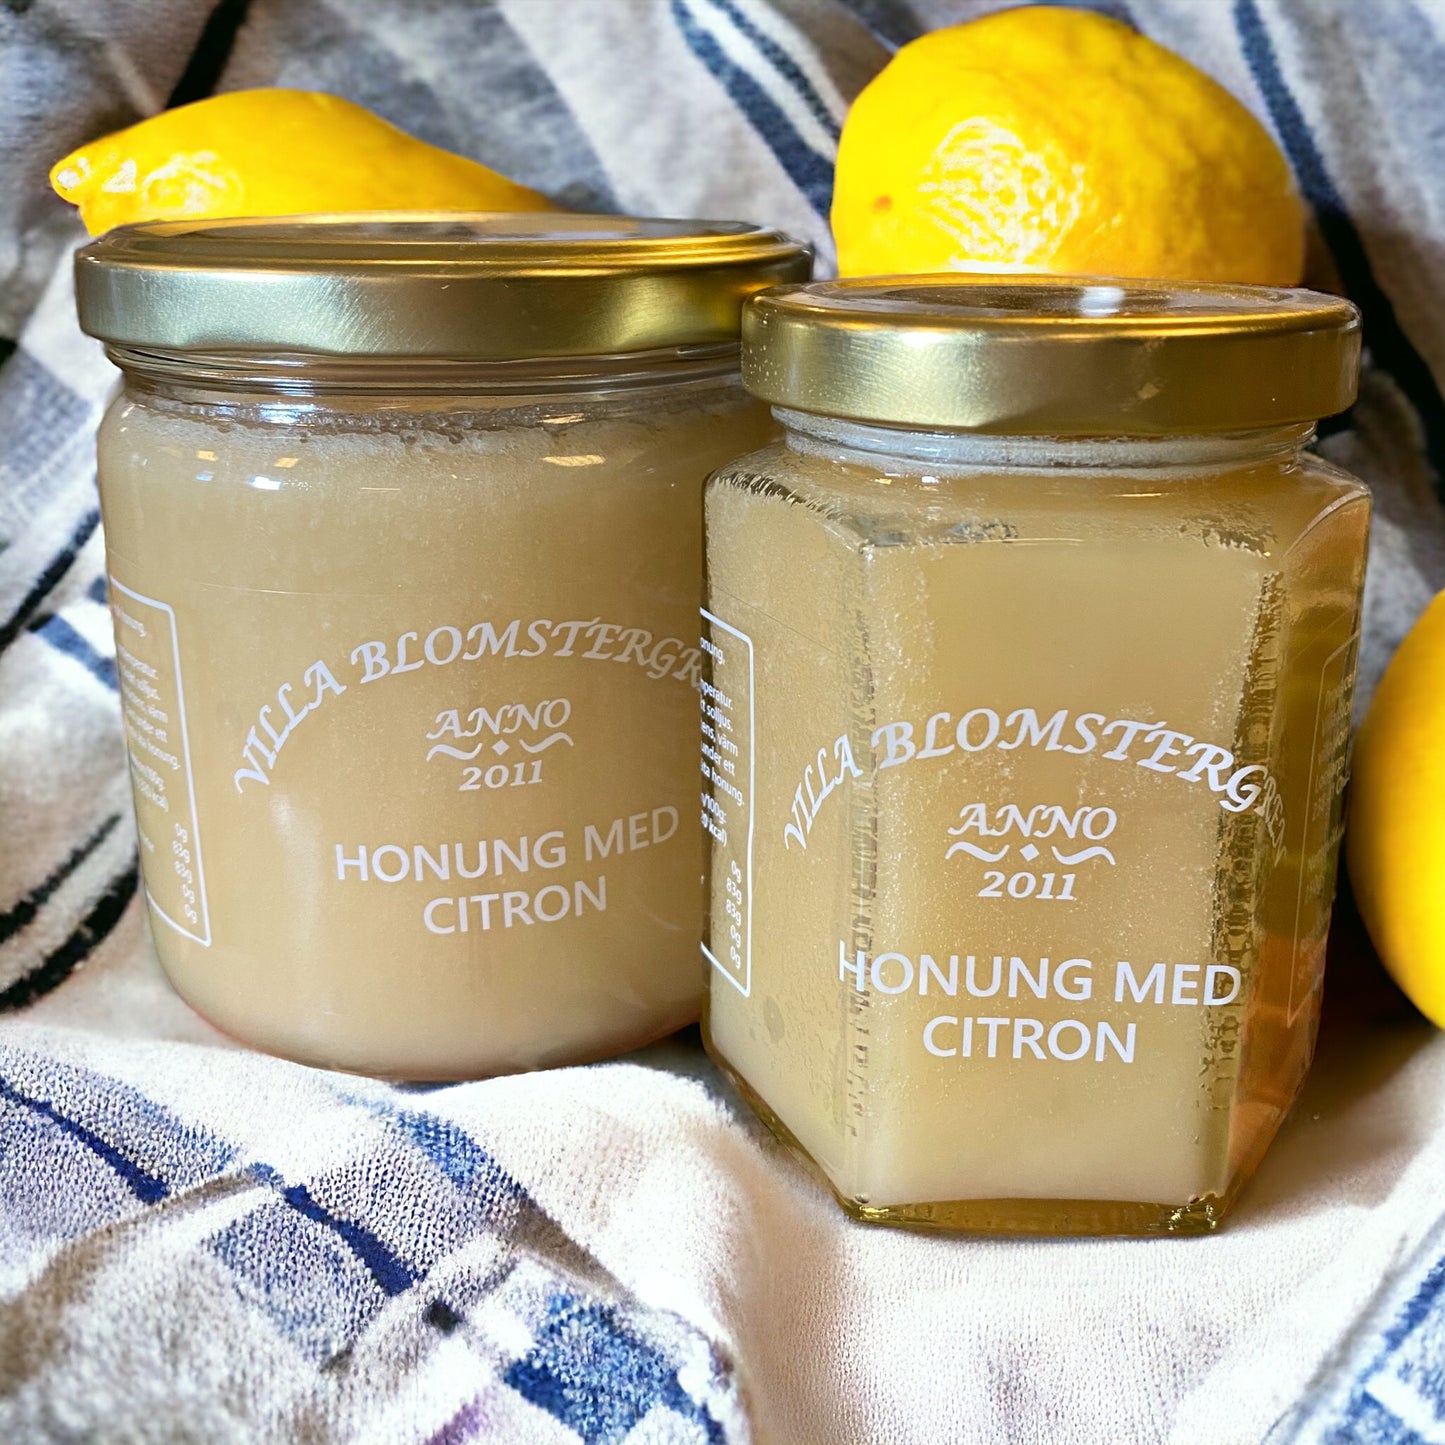 Honung med Citron 500g